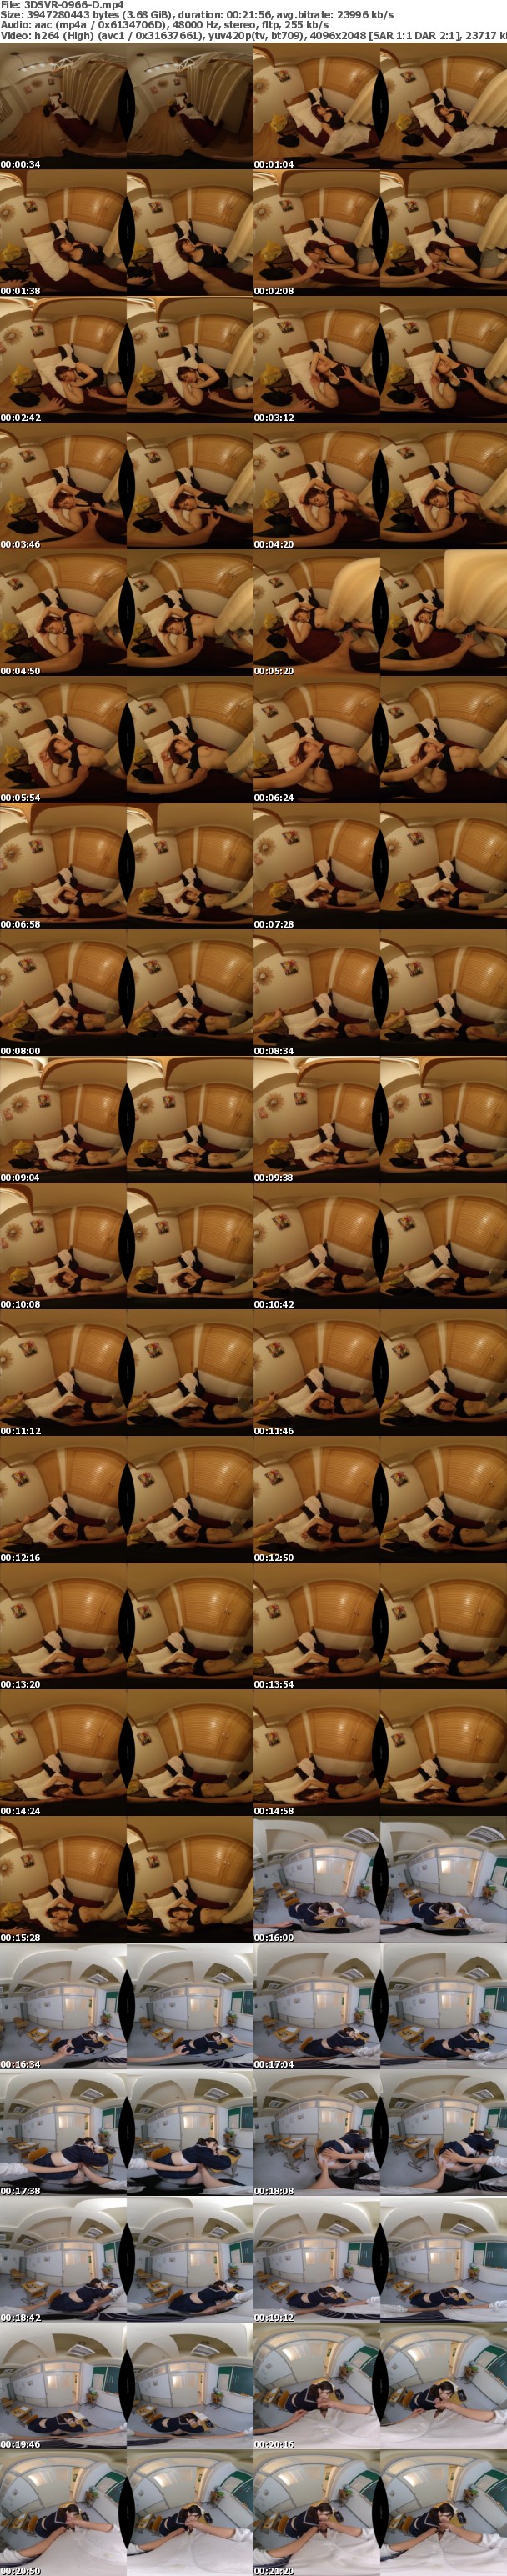 (VR) 3DSVR-0966 寝てる女子に顔射 カラオケ、ファミレス、車中泊…そこら辺で寝てる女子に顔射して猛ダッシュで逃げた結果www【全編ワイの本物ザーメンお顔発射www】